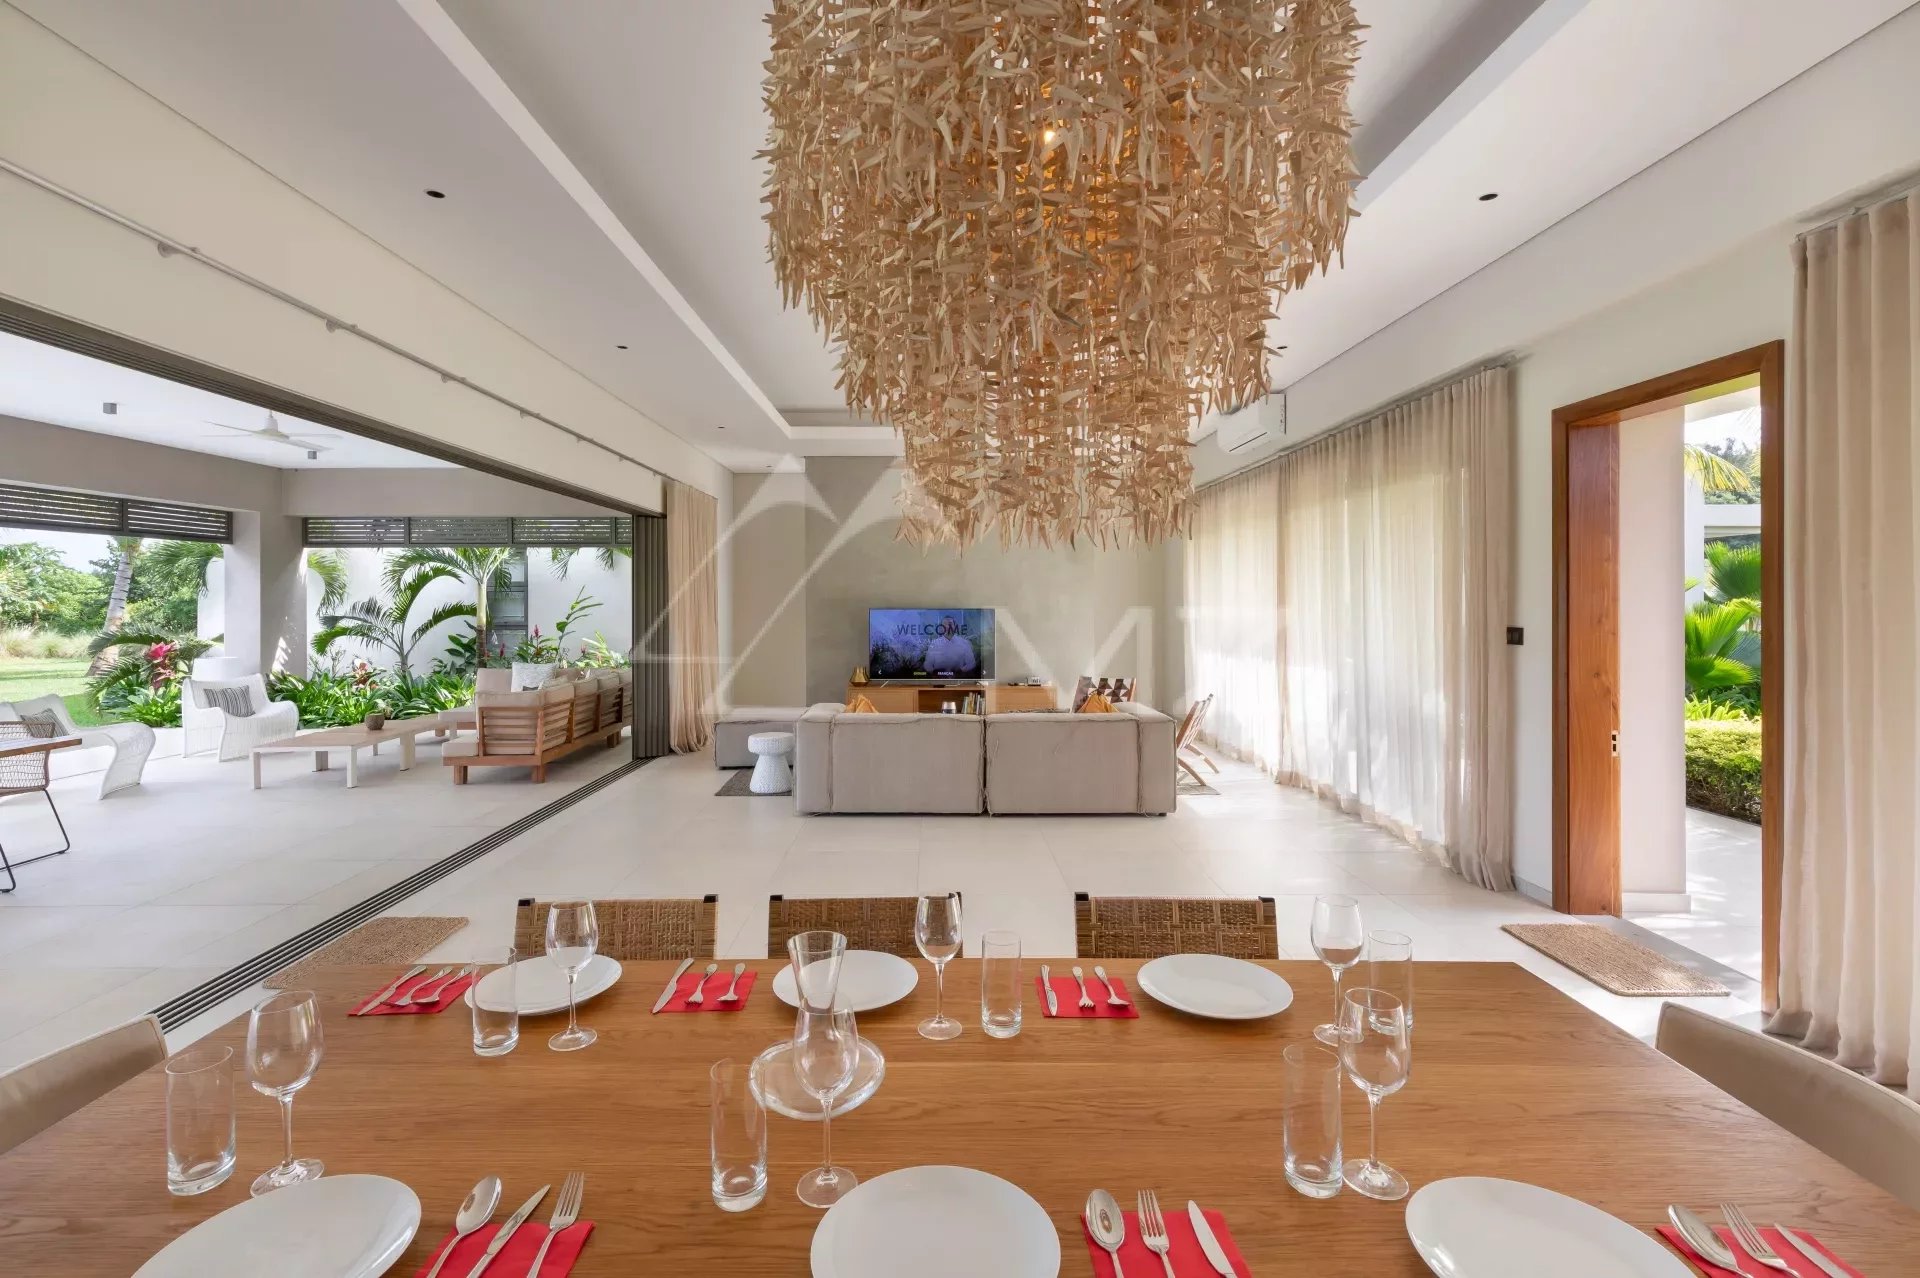 4 bedroom villa in a prestigious residential estate